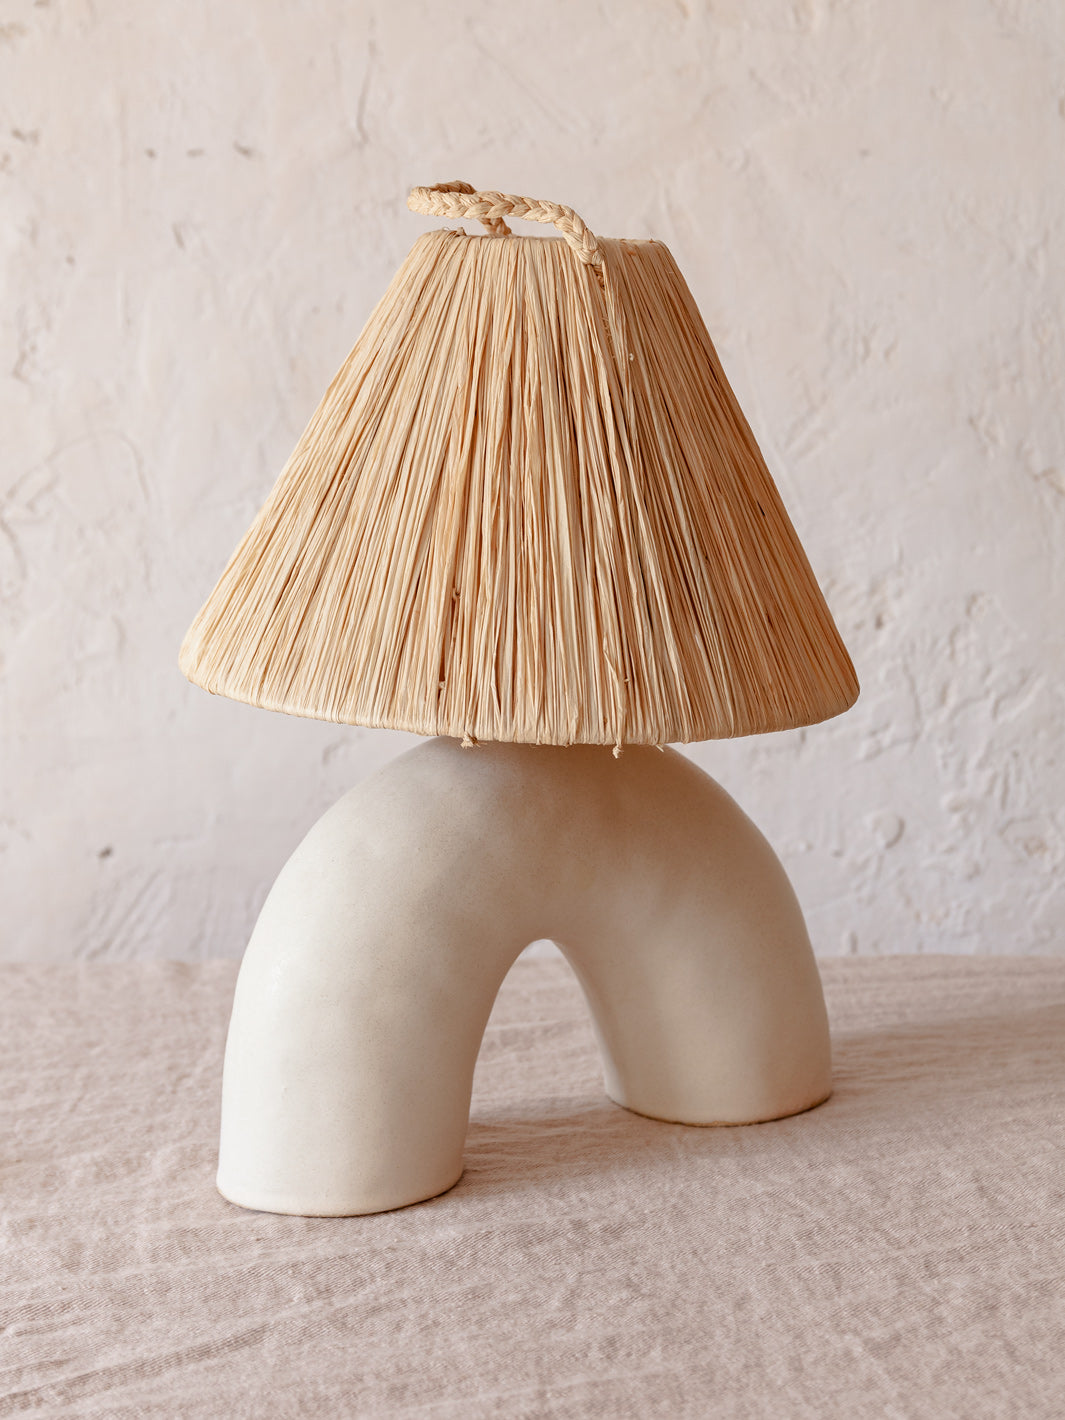 Lamp Volta by Marta Bonilla